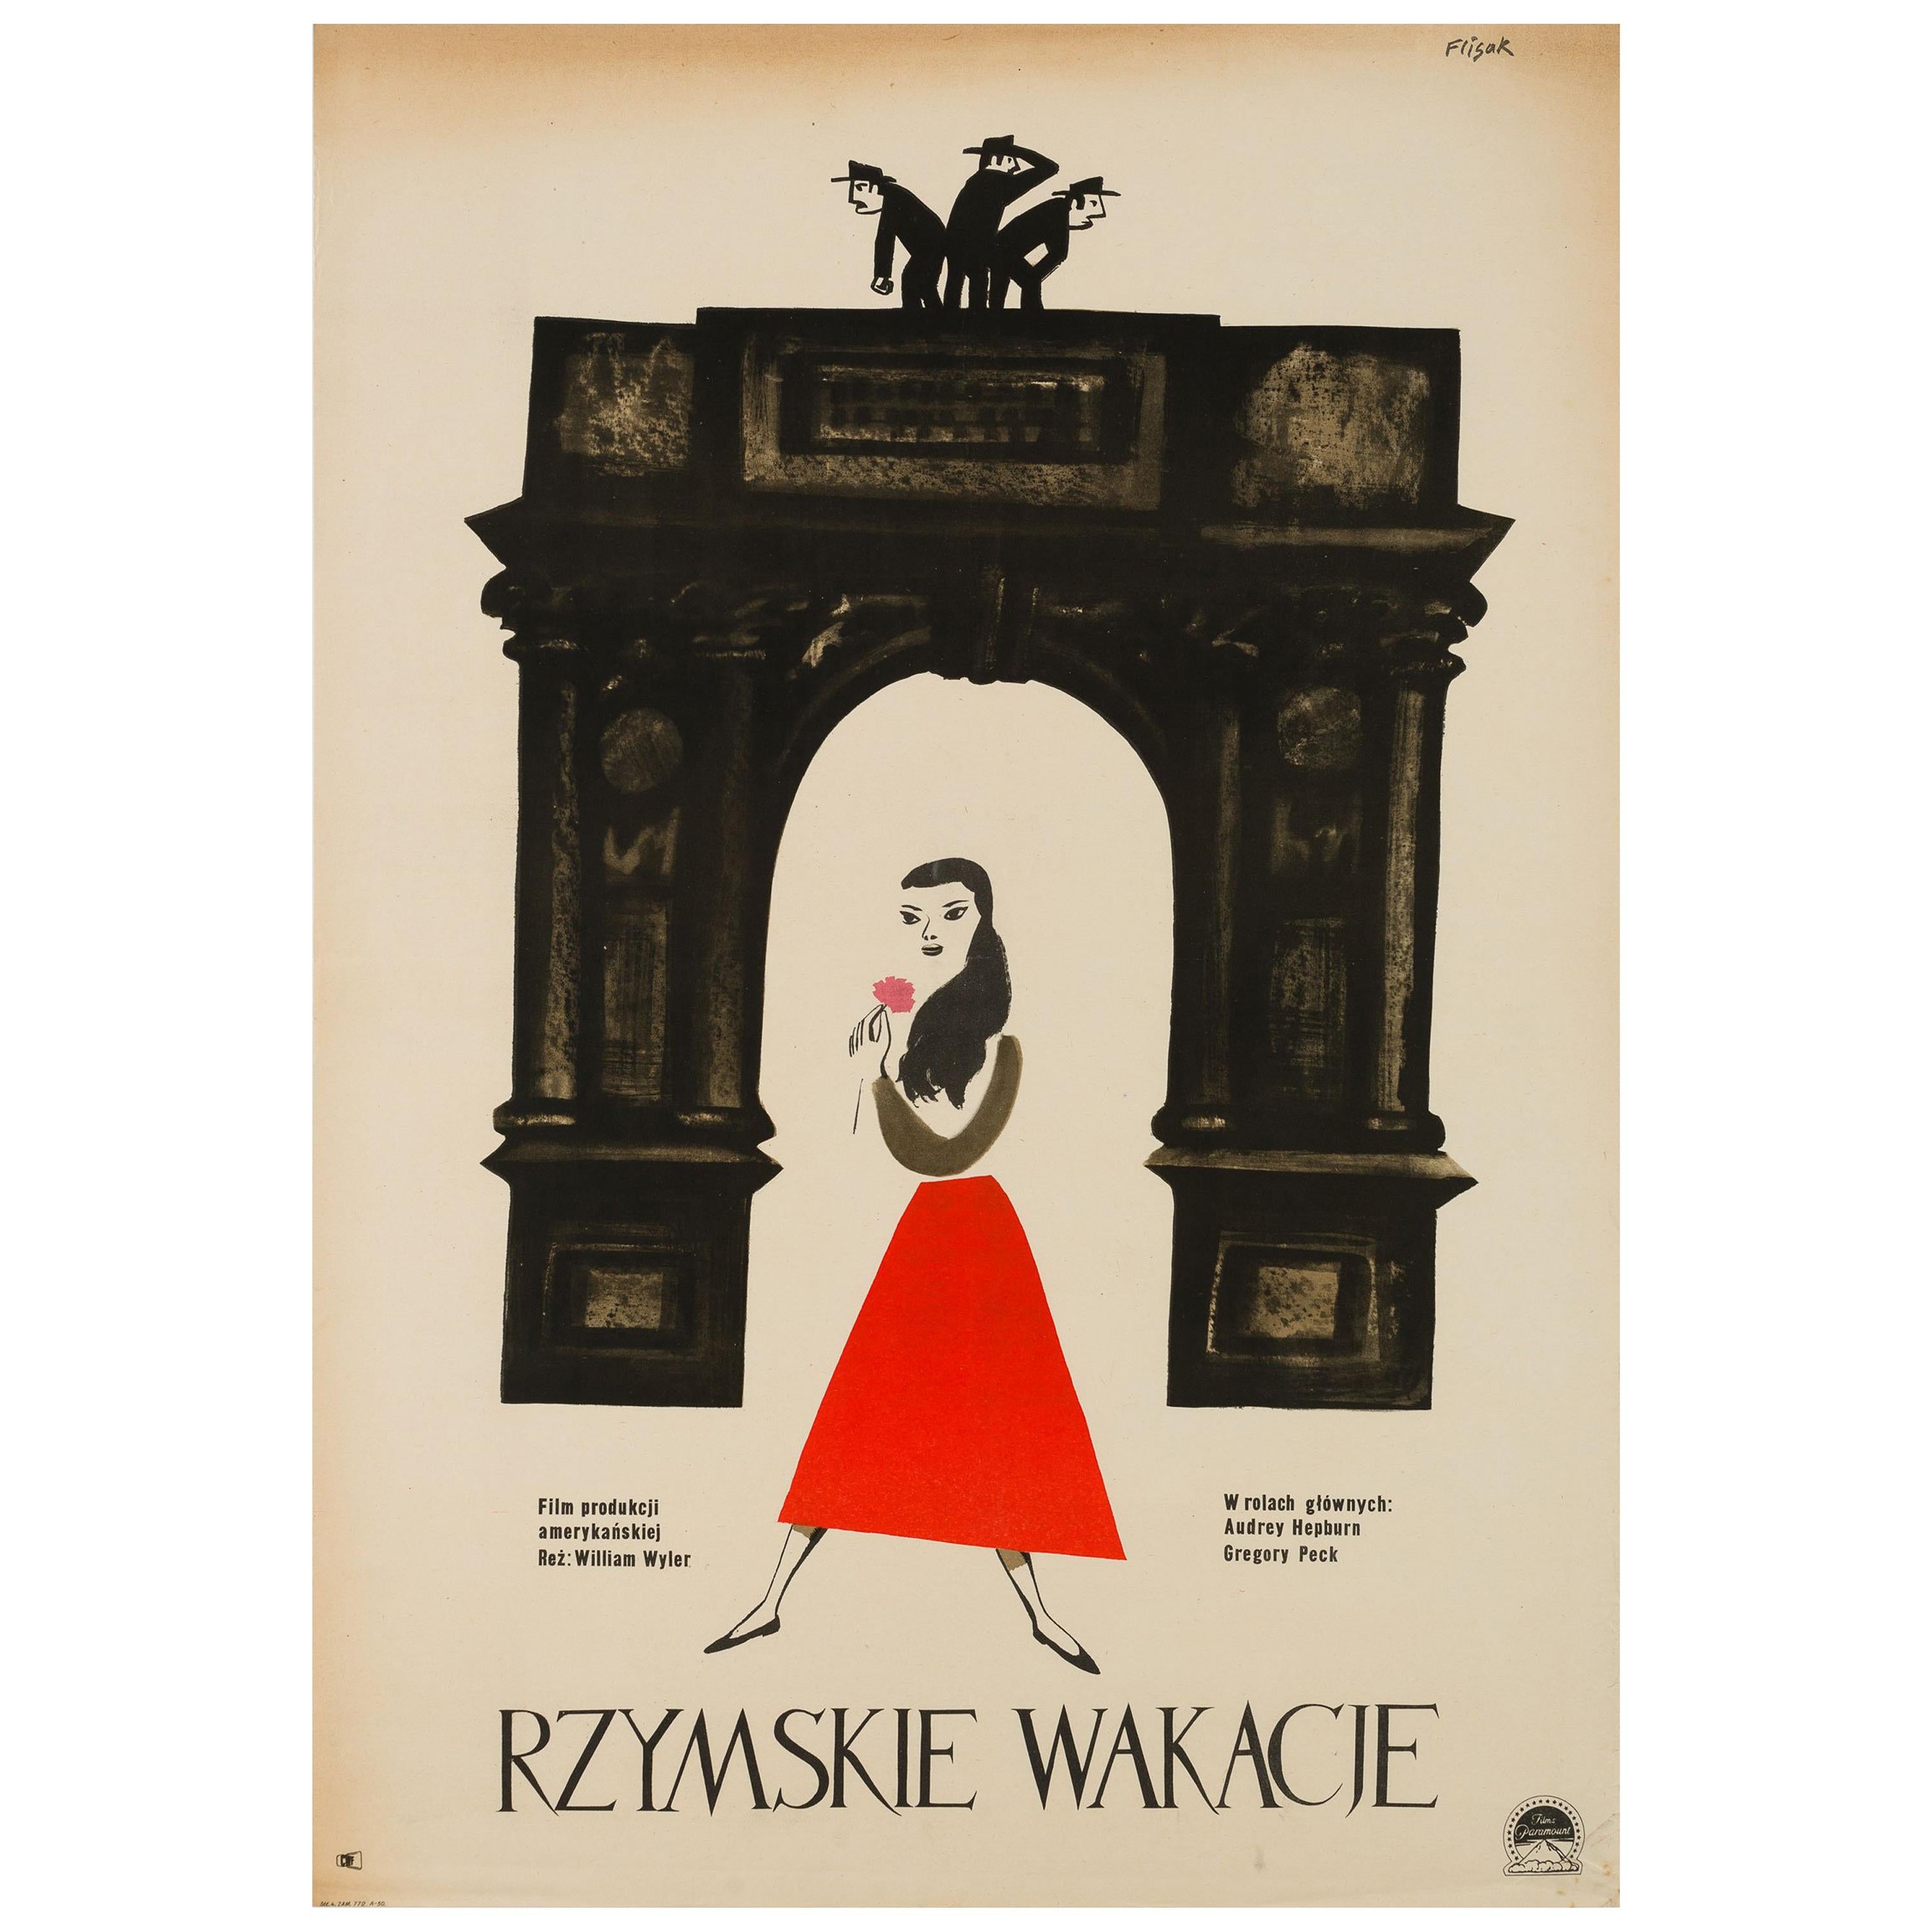 Roman Holiday Original Polish Film Poster by Jerzy Flisak, 1959